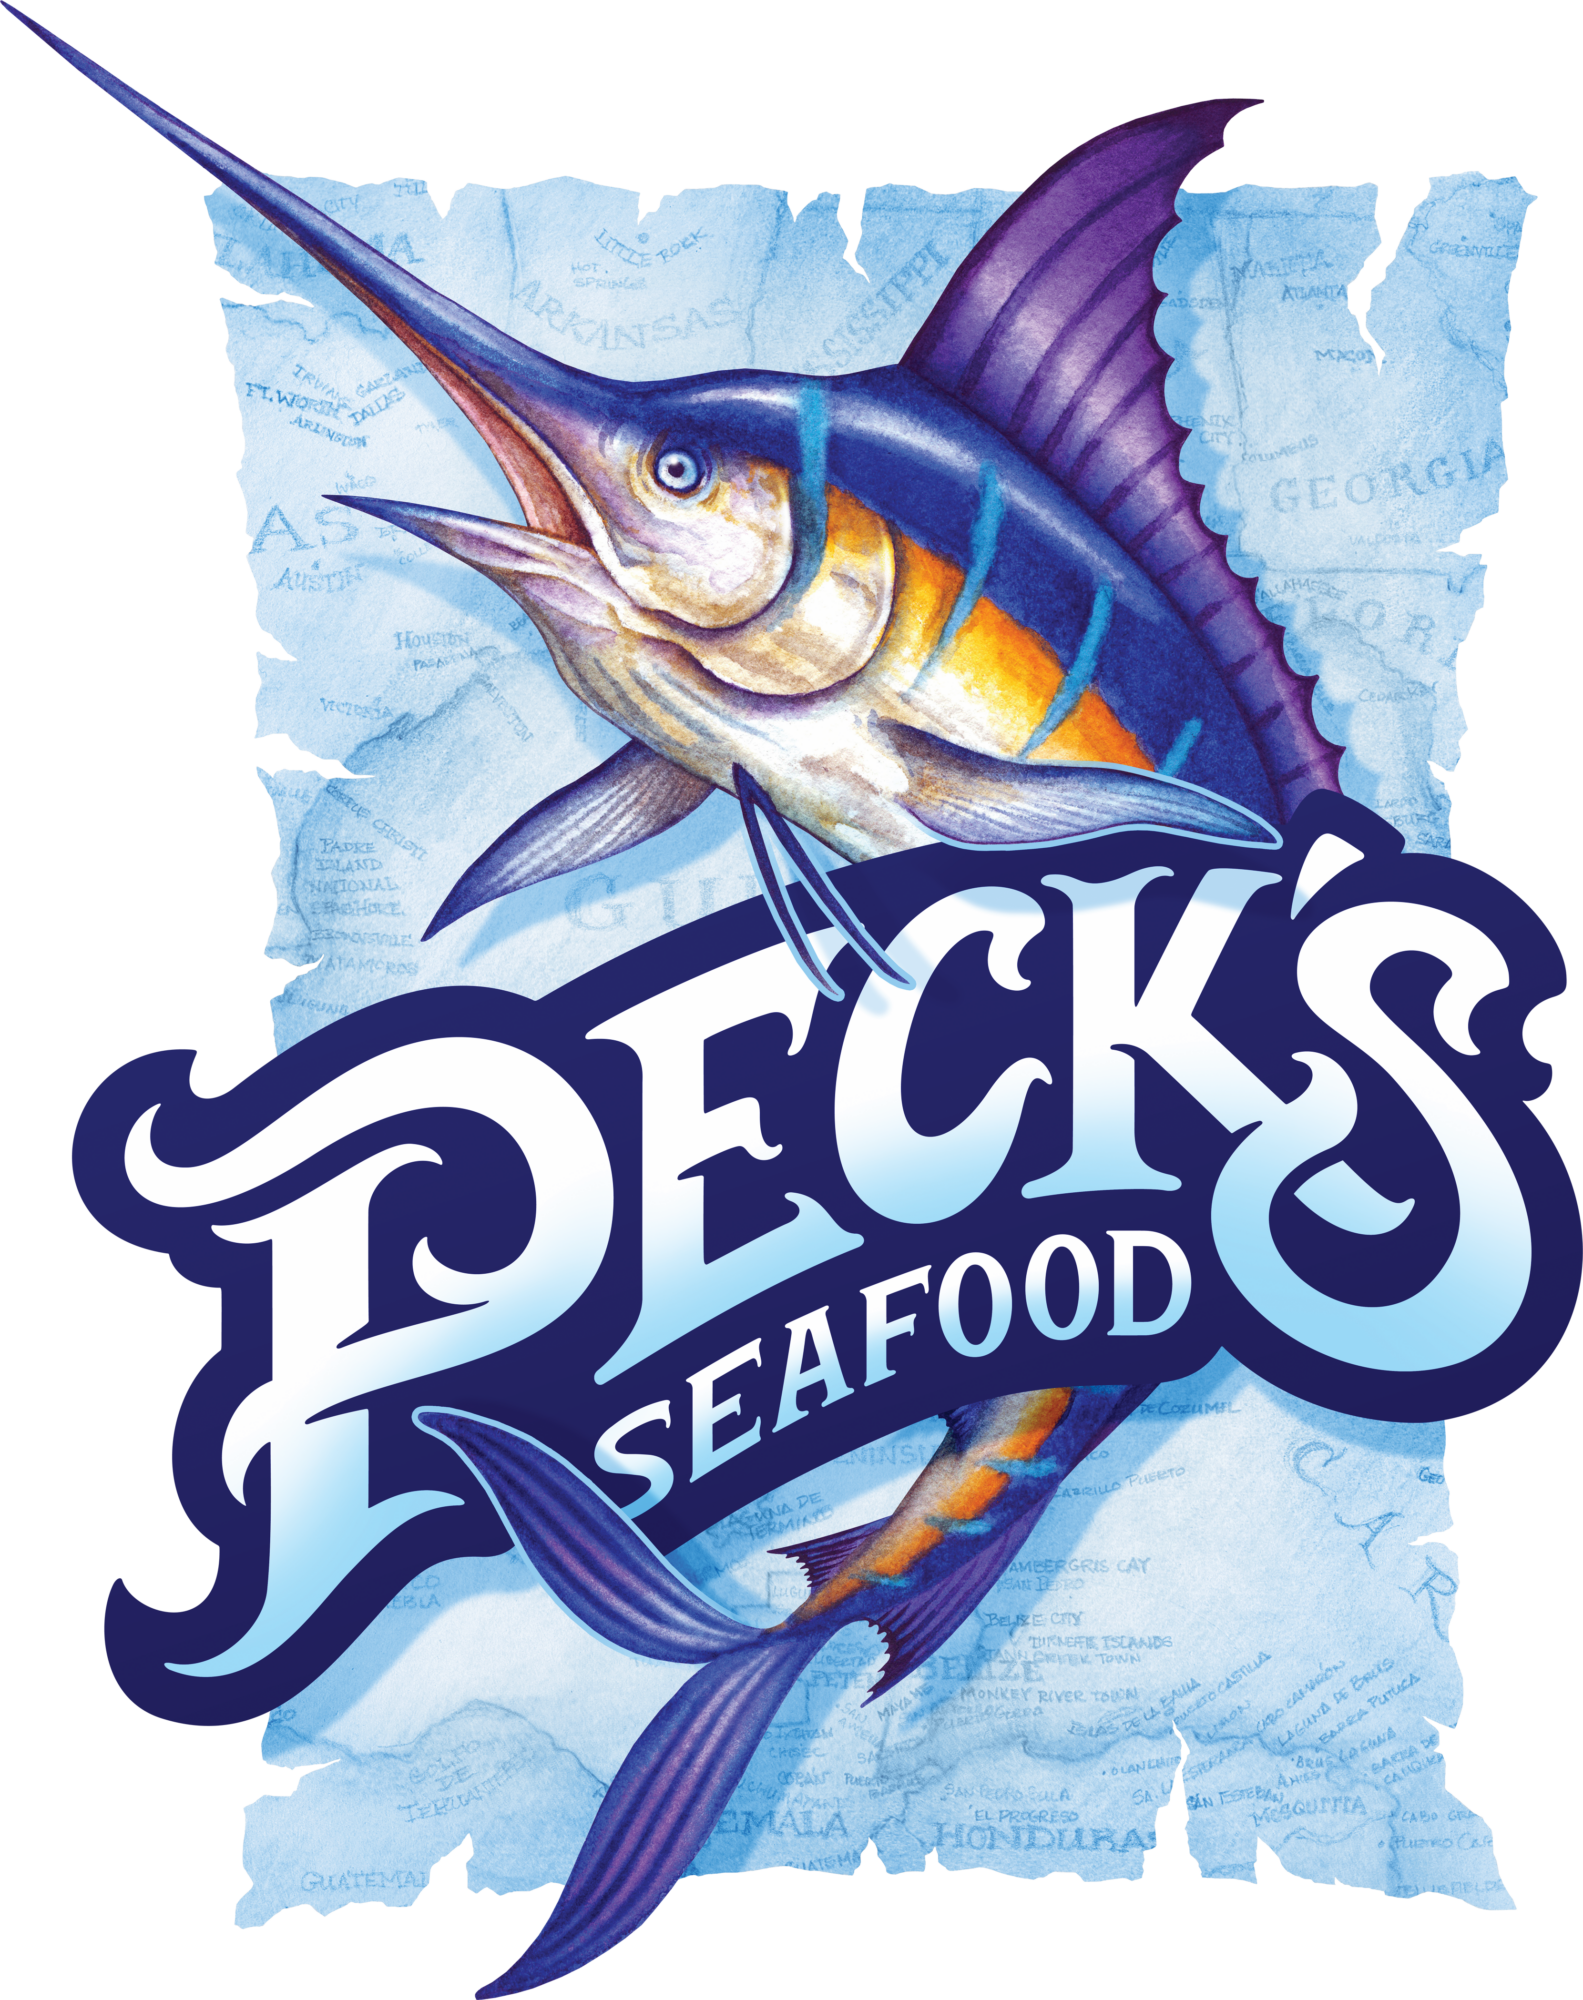 Peck’s Seafood-logo